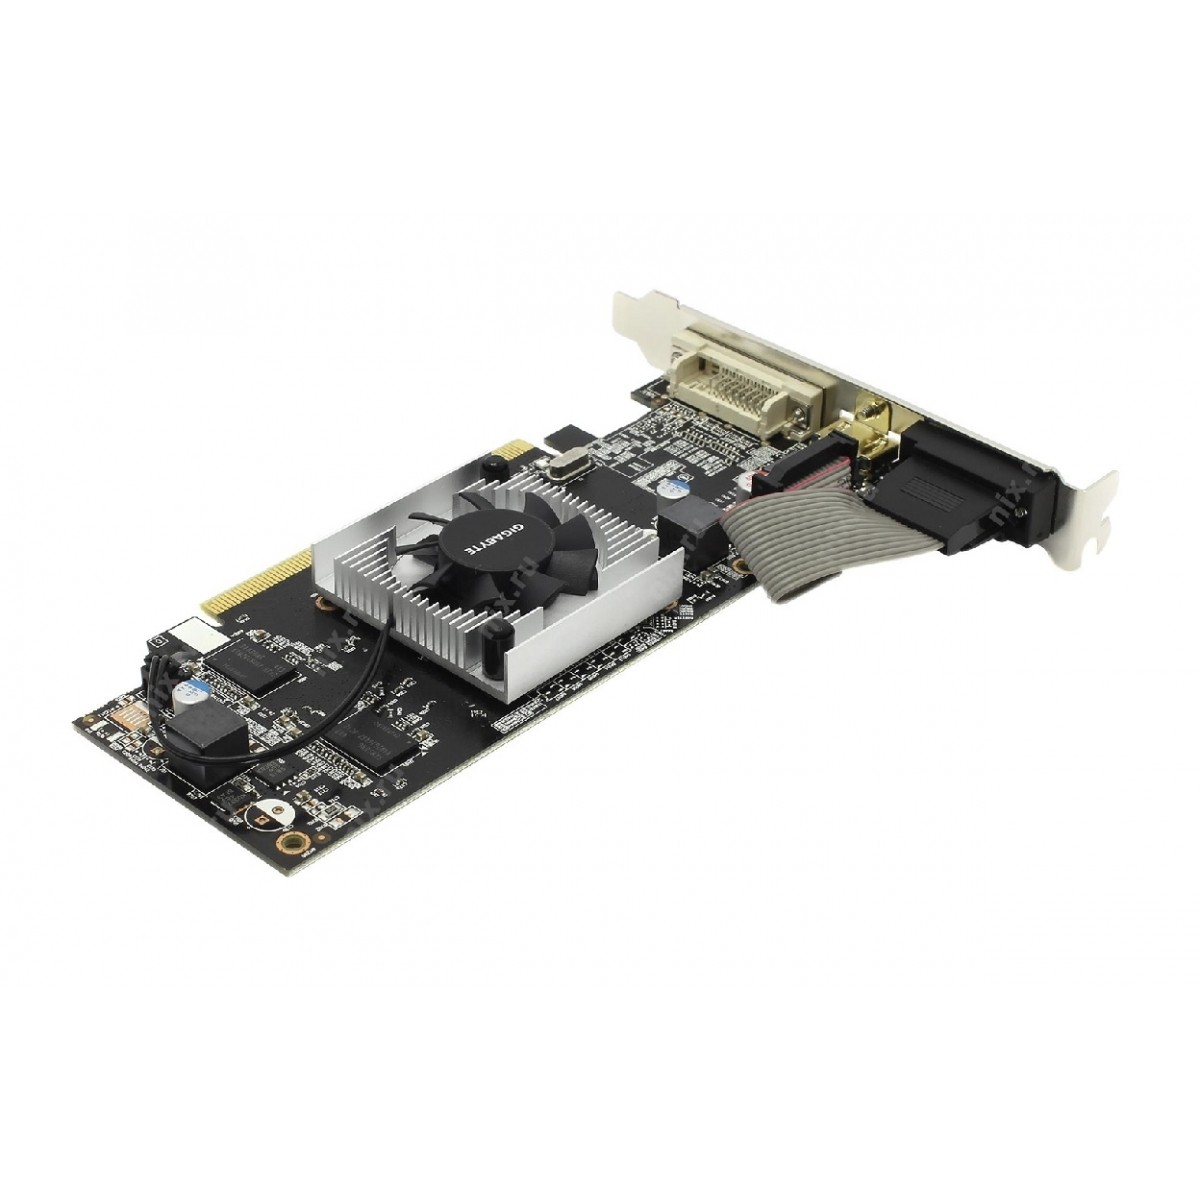 Placa de Vídeo Gigabyte Radeon R5 230 1GB DDR3 PCI-Express VGA HDMI DVI C/ Low Profile GV-R523D3-1GL